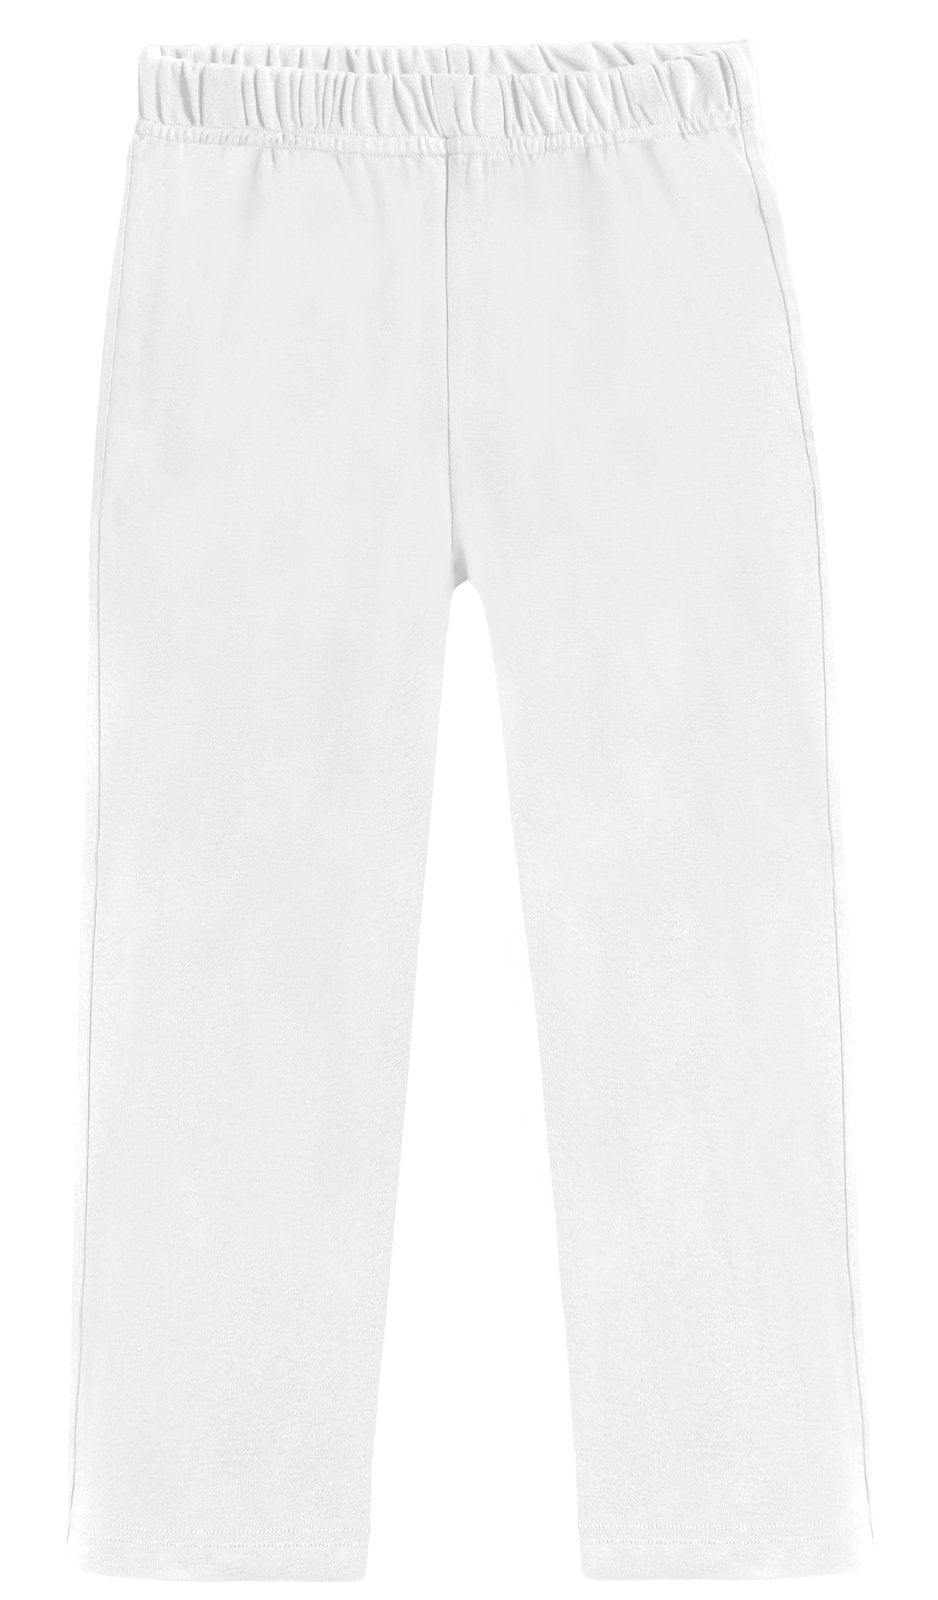 Boys Soft Cotton Athletic Pants - UPF 50+ | White - City Threads USA